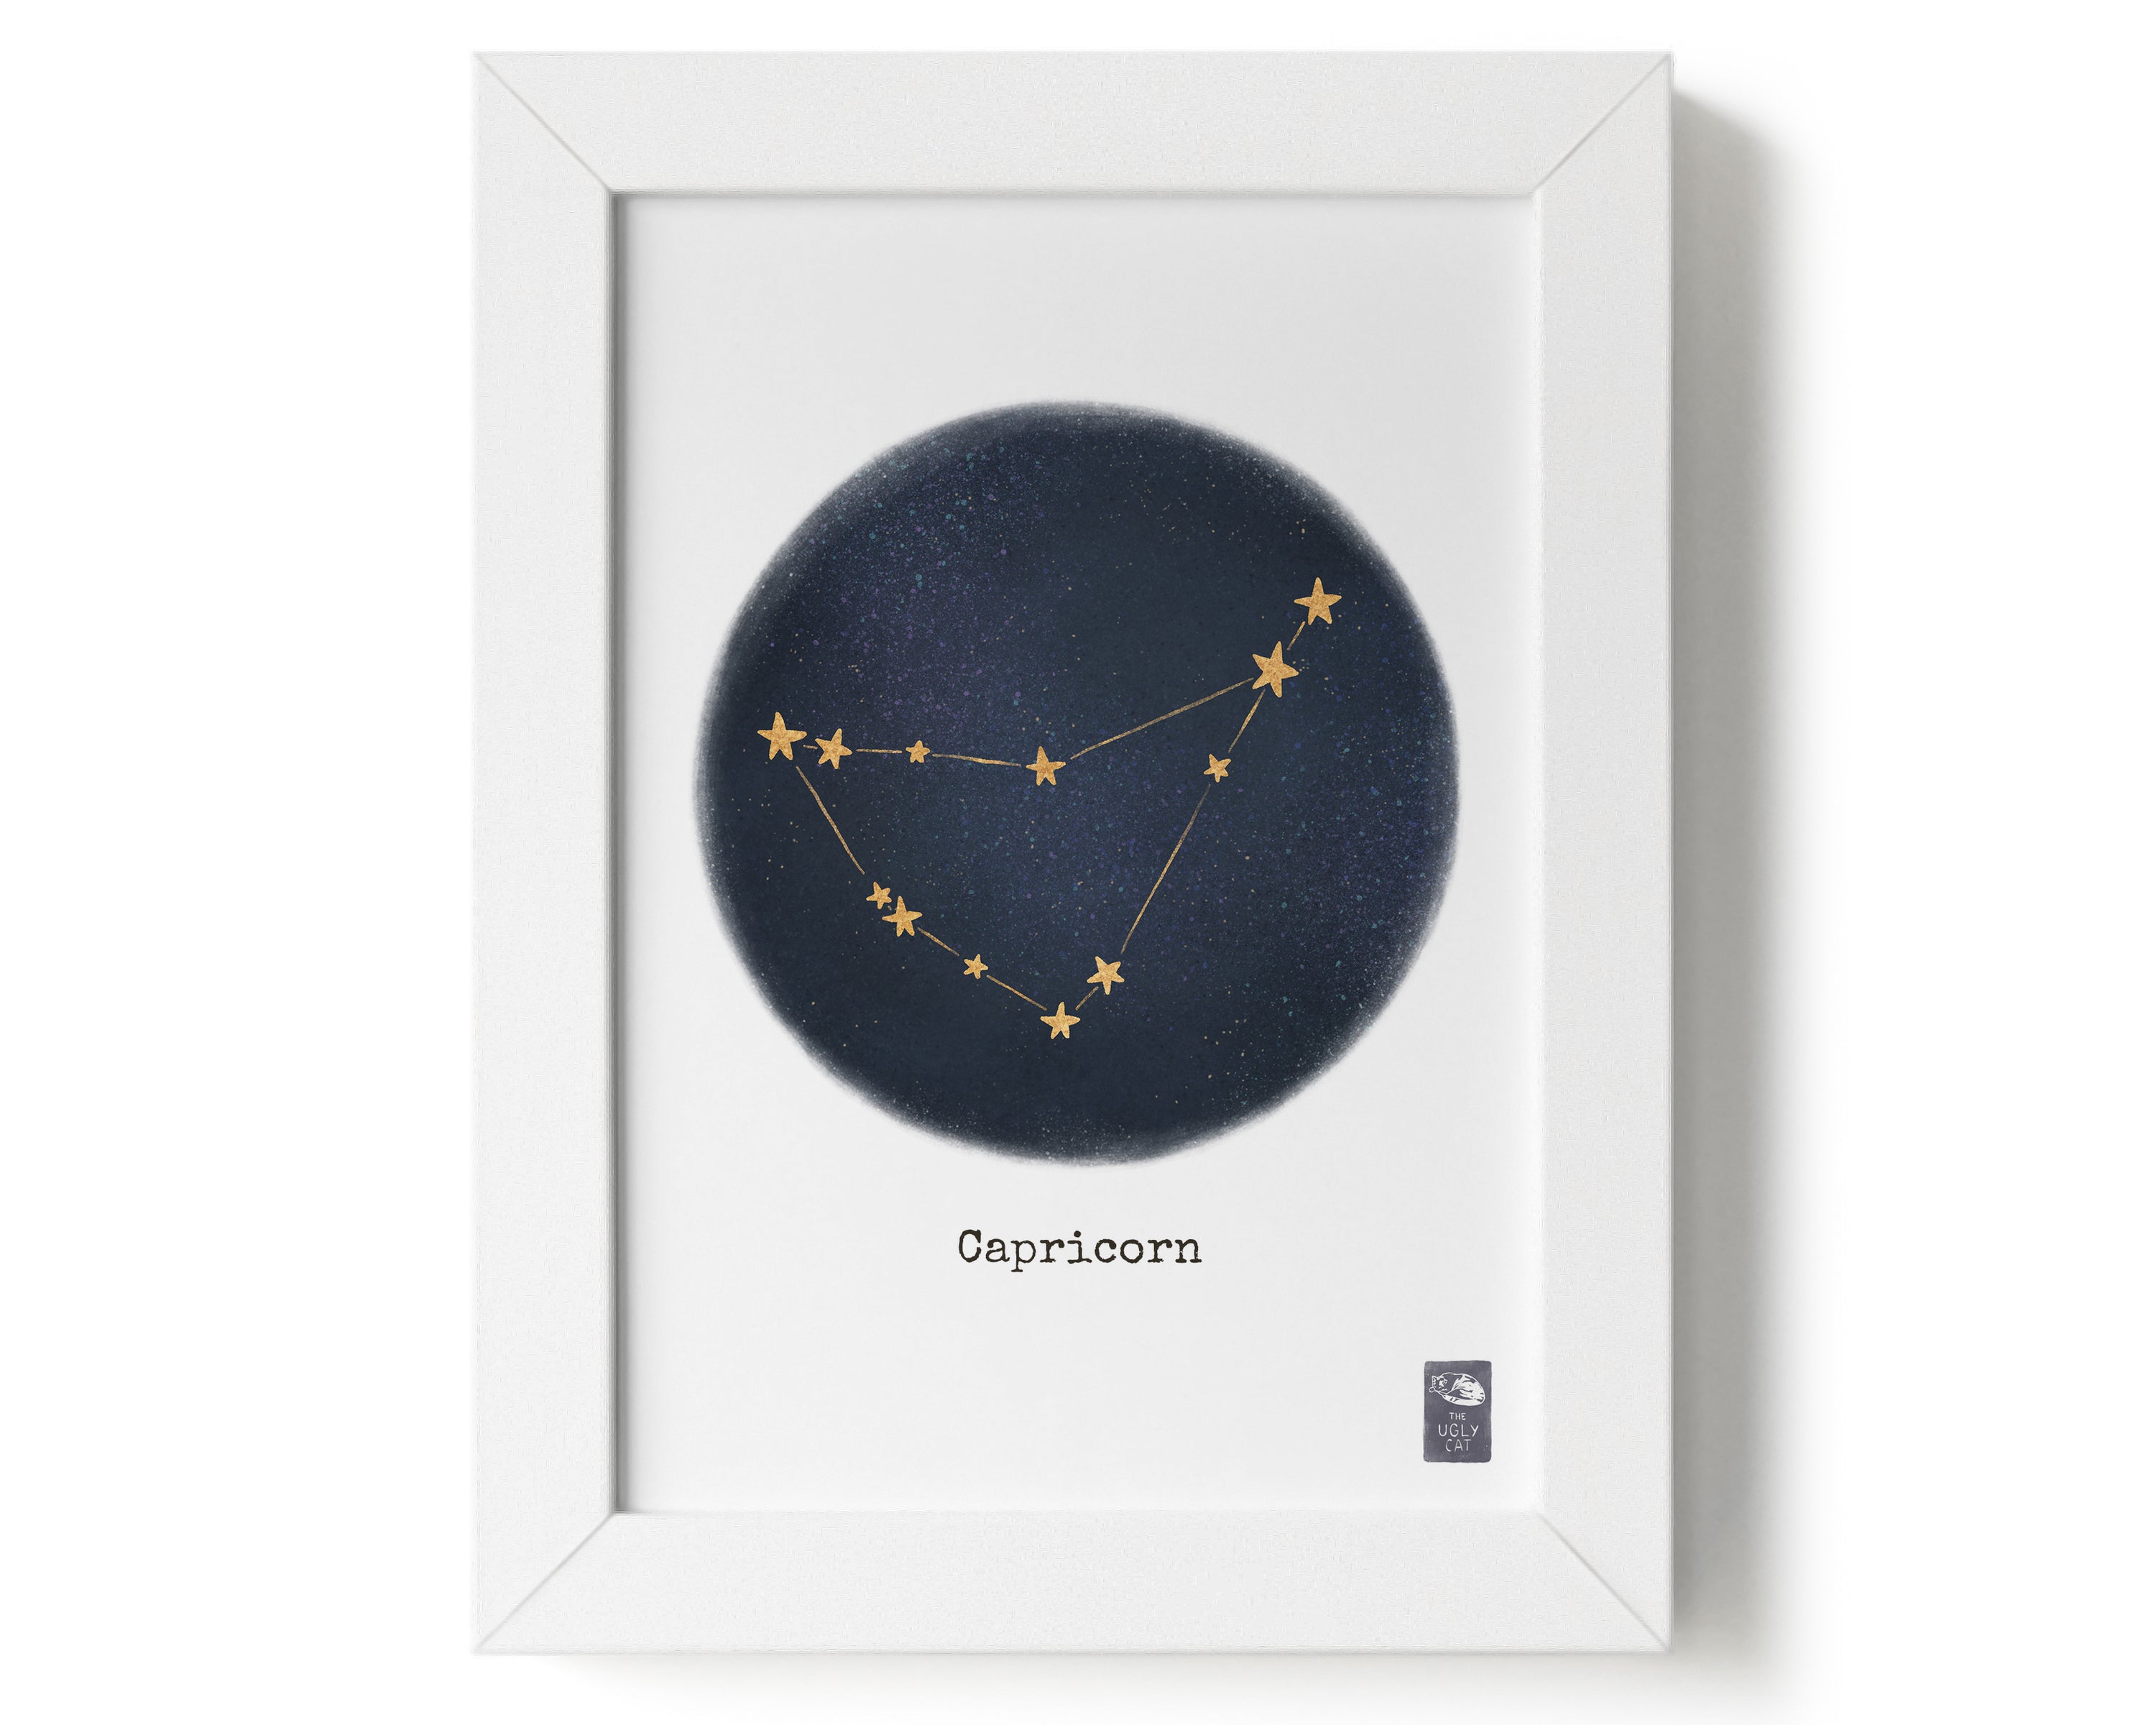 "Capricorn ♑" by Catherine Hébert - Capricorn Zodiac Constellation Art Print - 5"x7" size